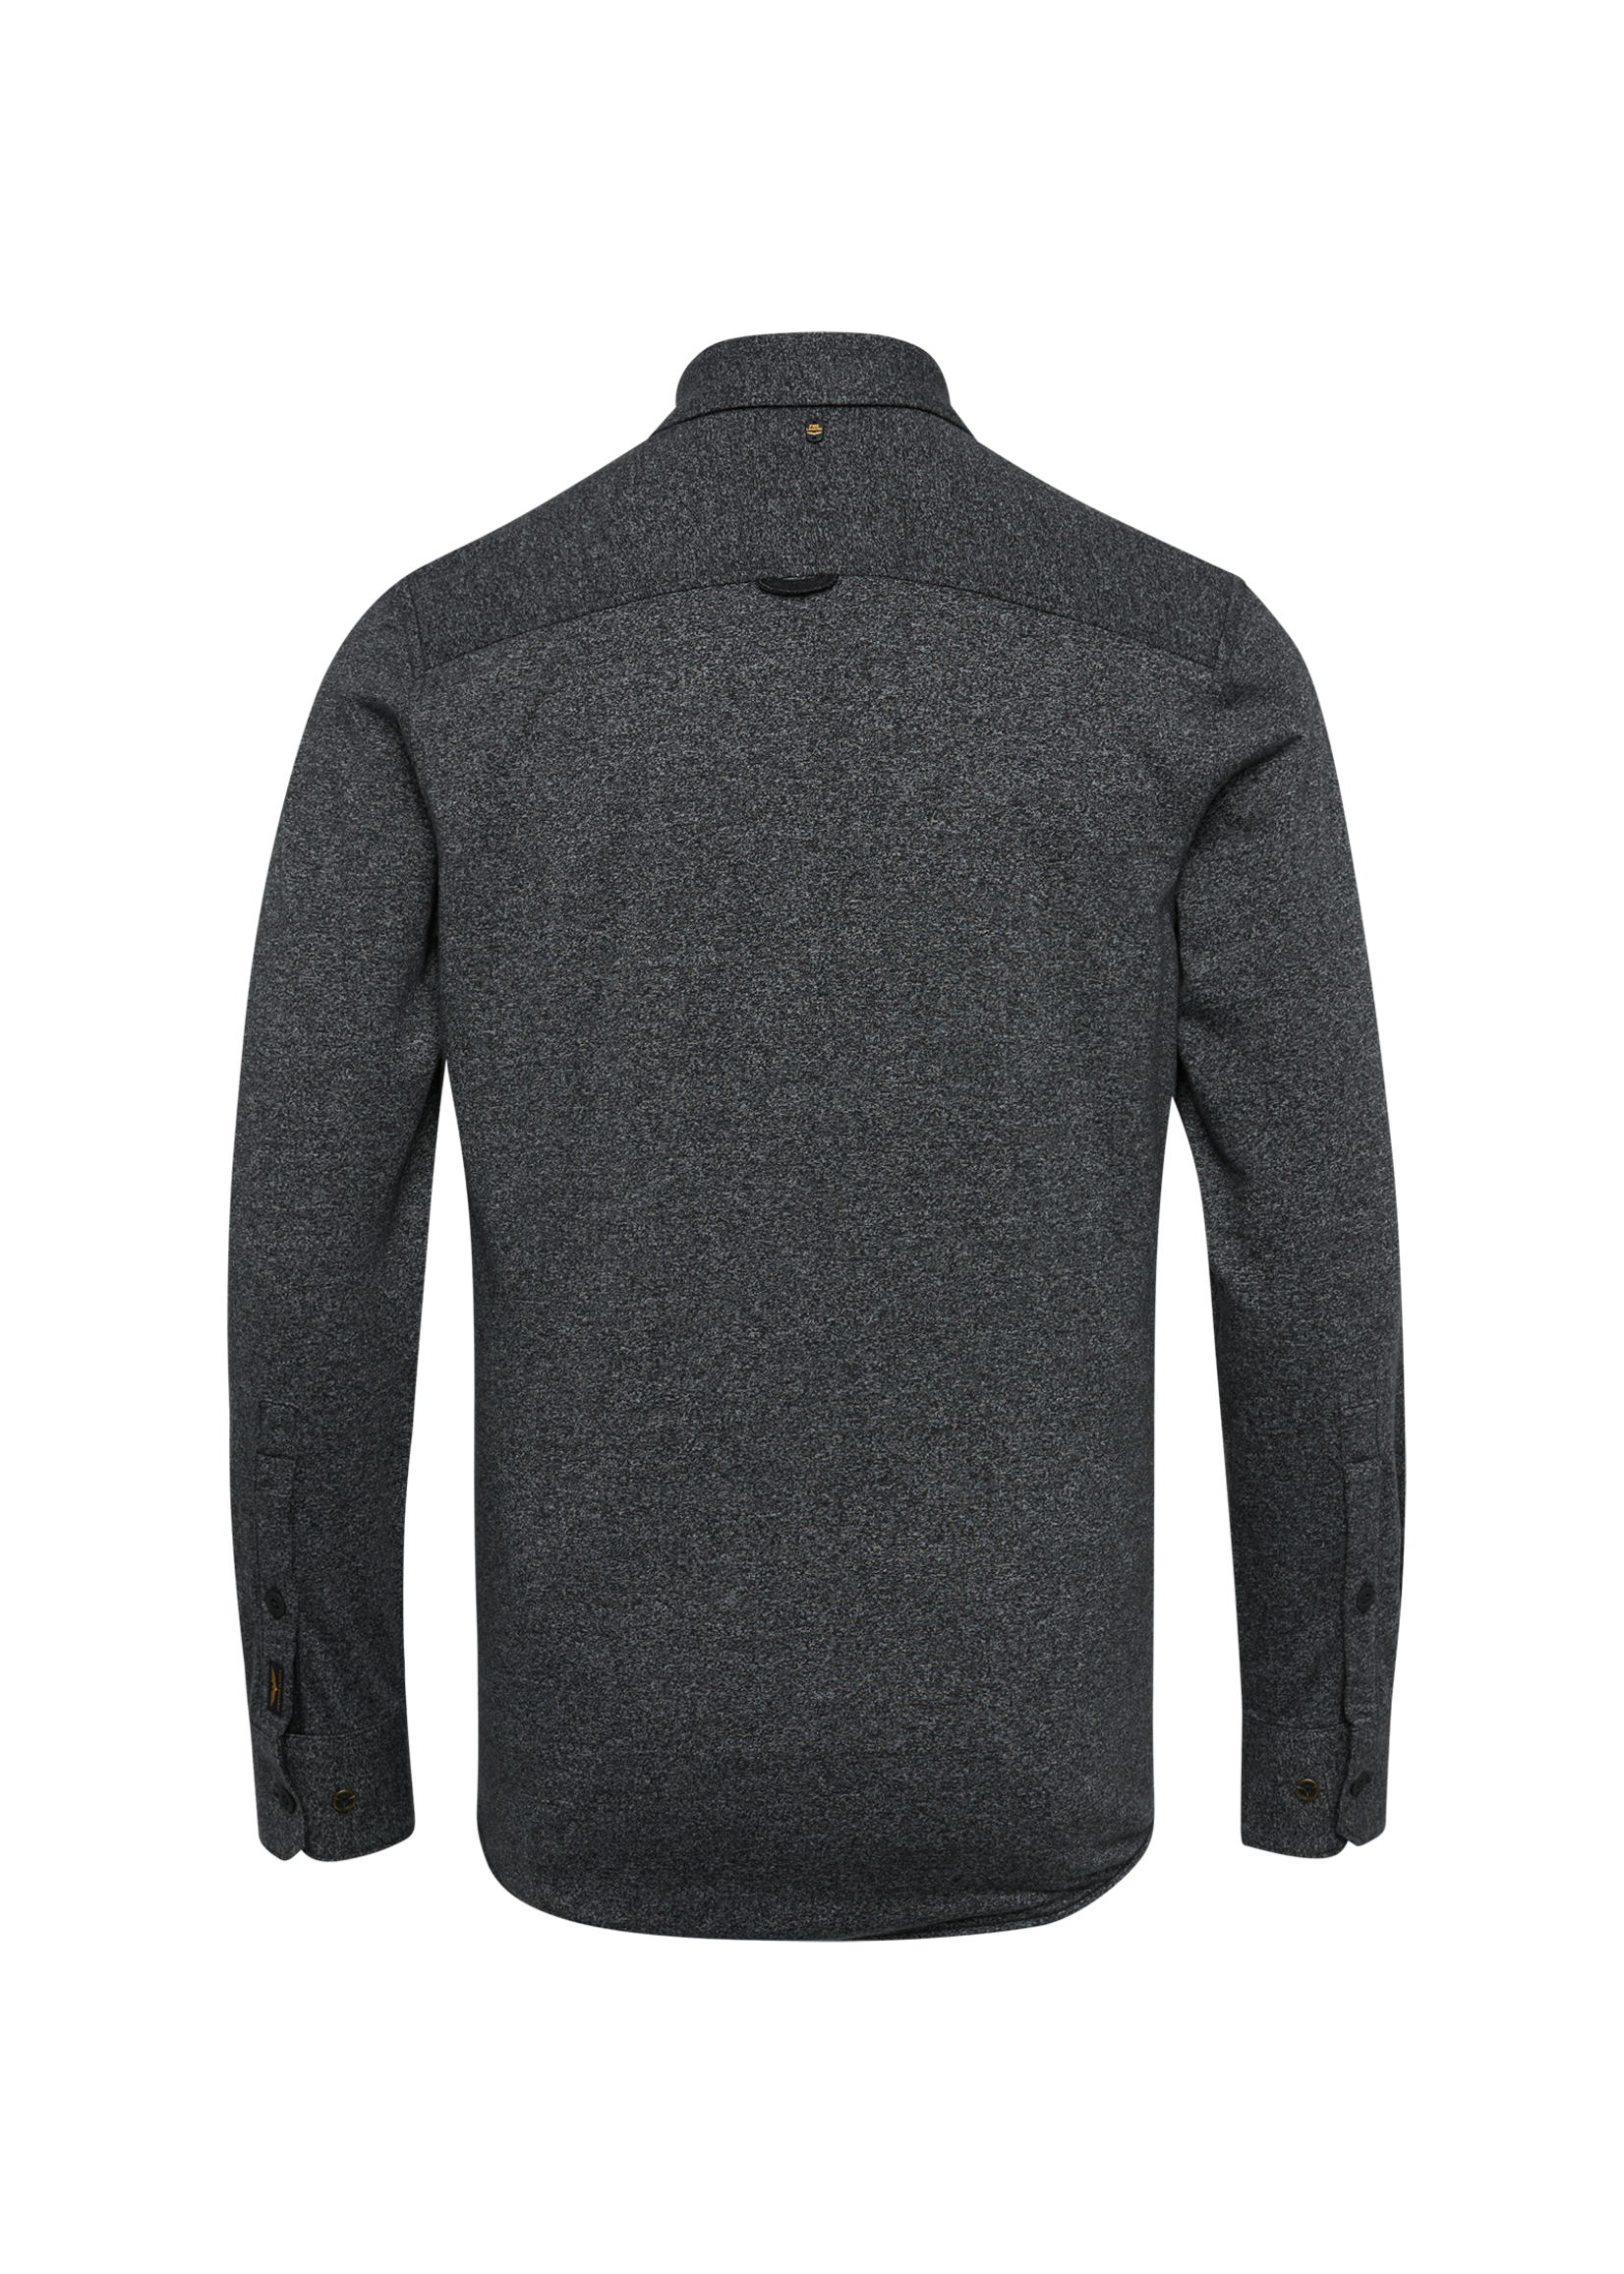 PME-Legend Long Sleeve Shirt Cotton Jersey Grindle Fleece